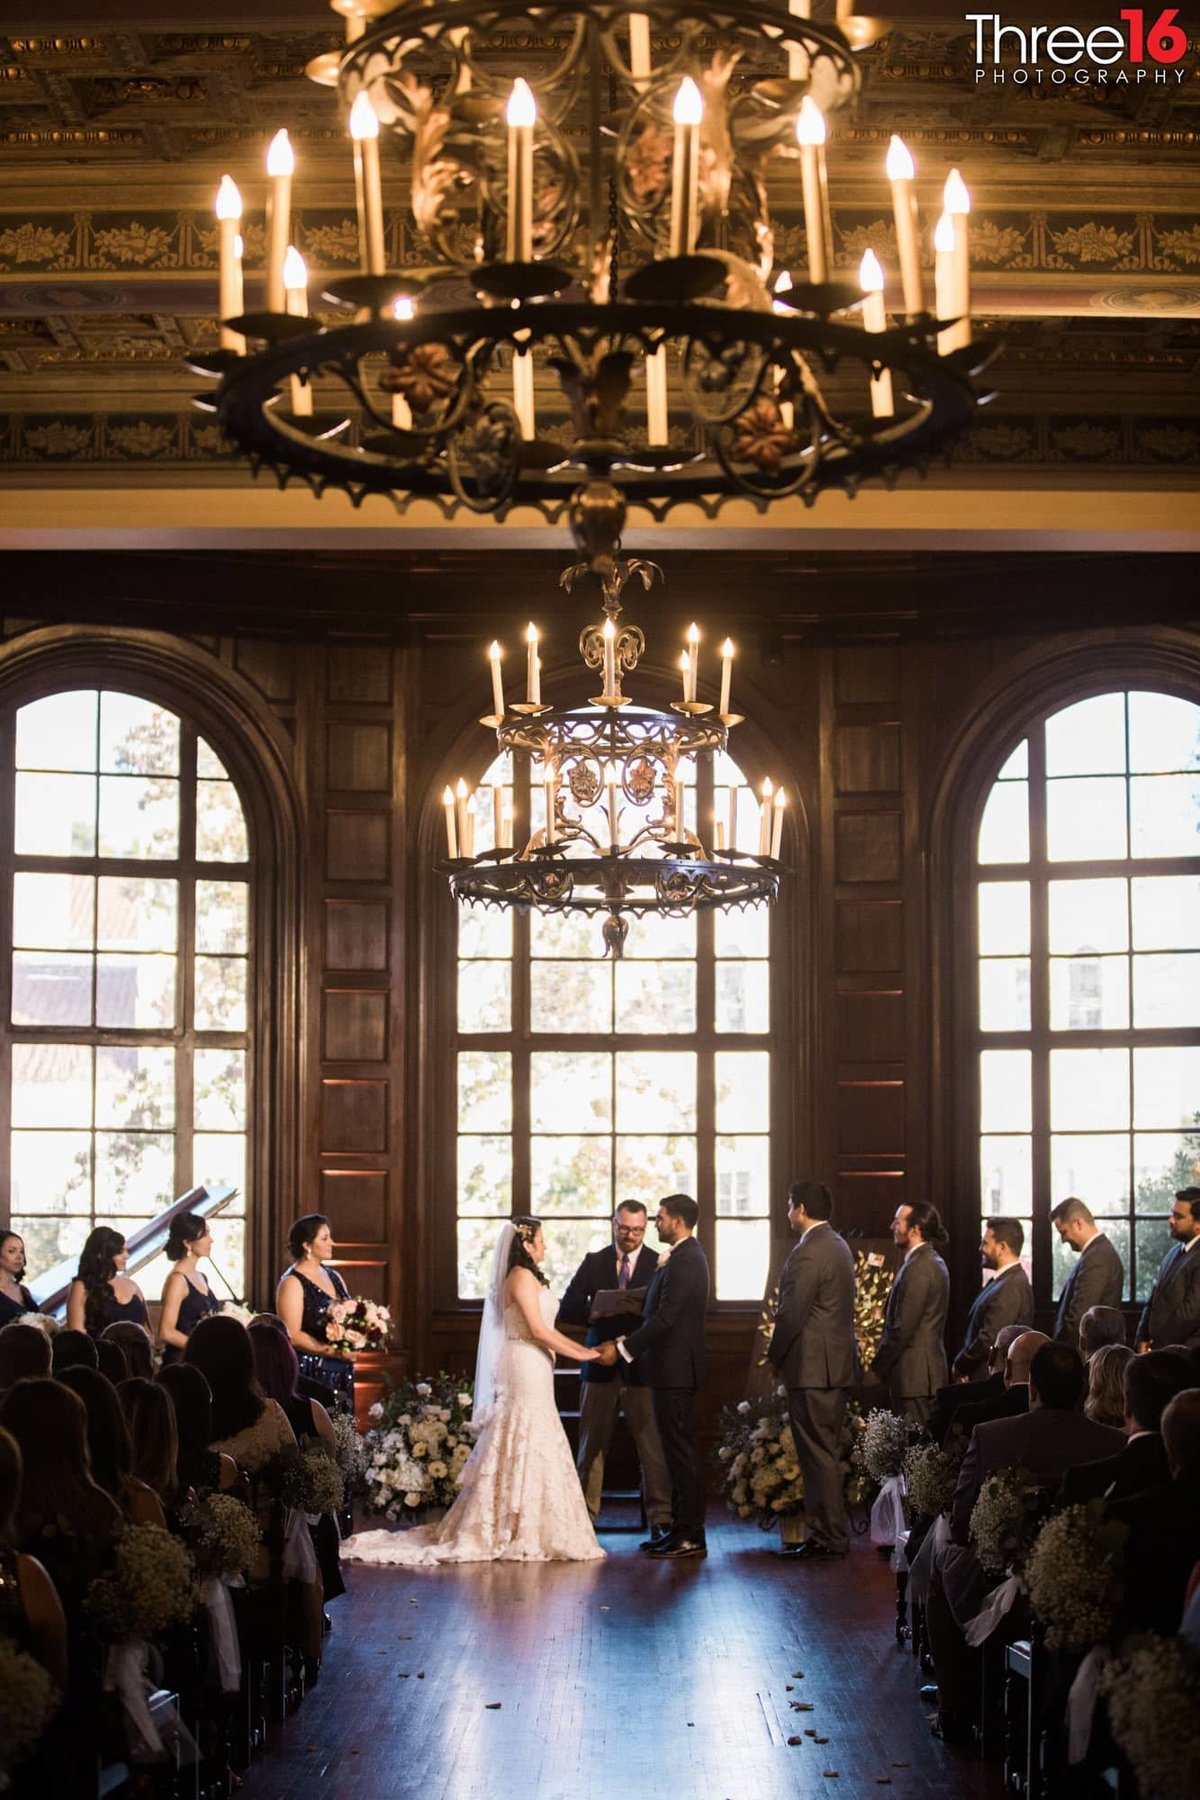 Elegant indoor wedding ceremony at the Ebell in LA